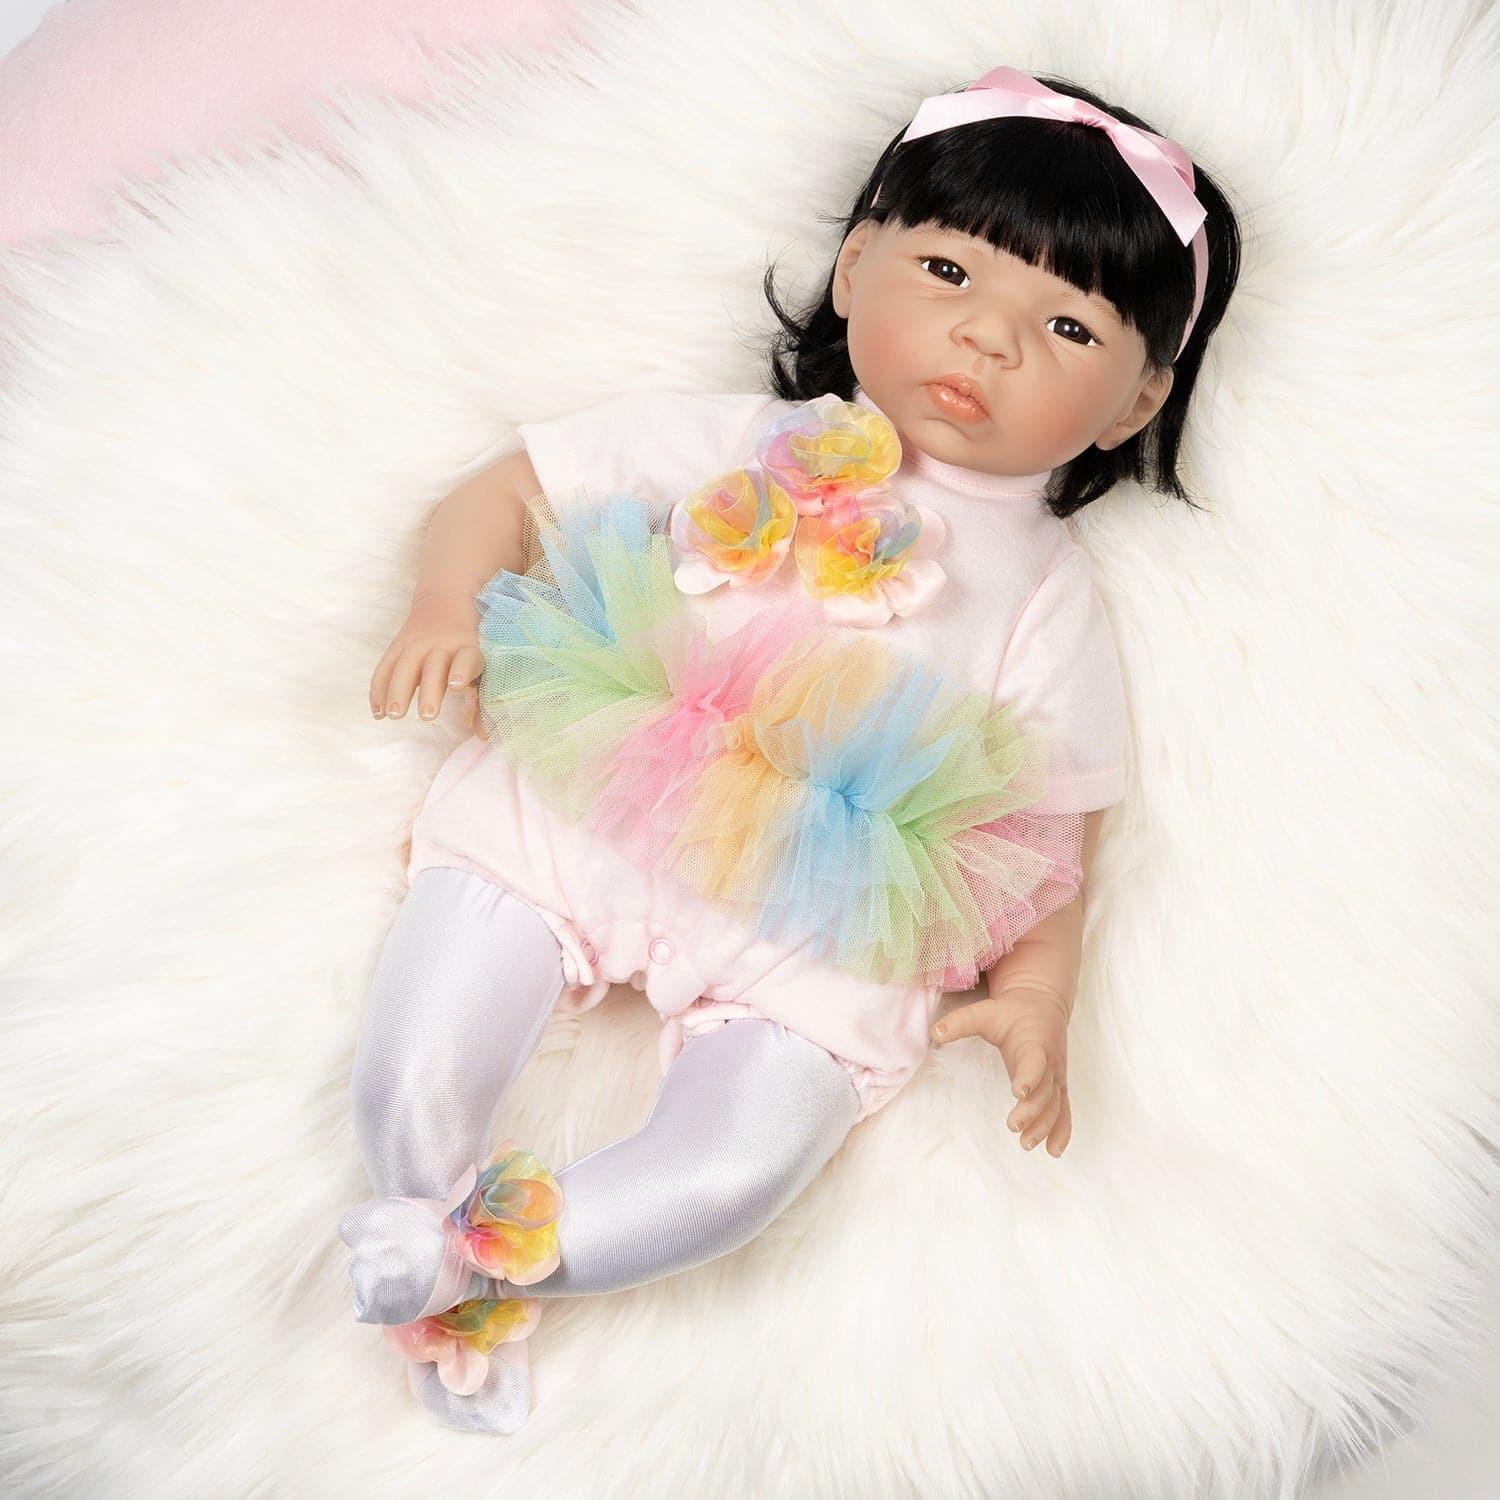 Paradise Galleries Asian Reborn Toddler Doll - Rainbow Ballerina - 19 inches